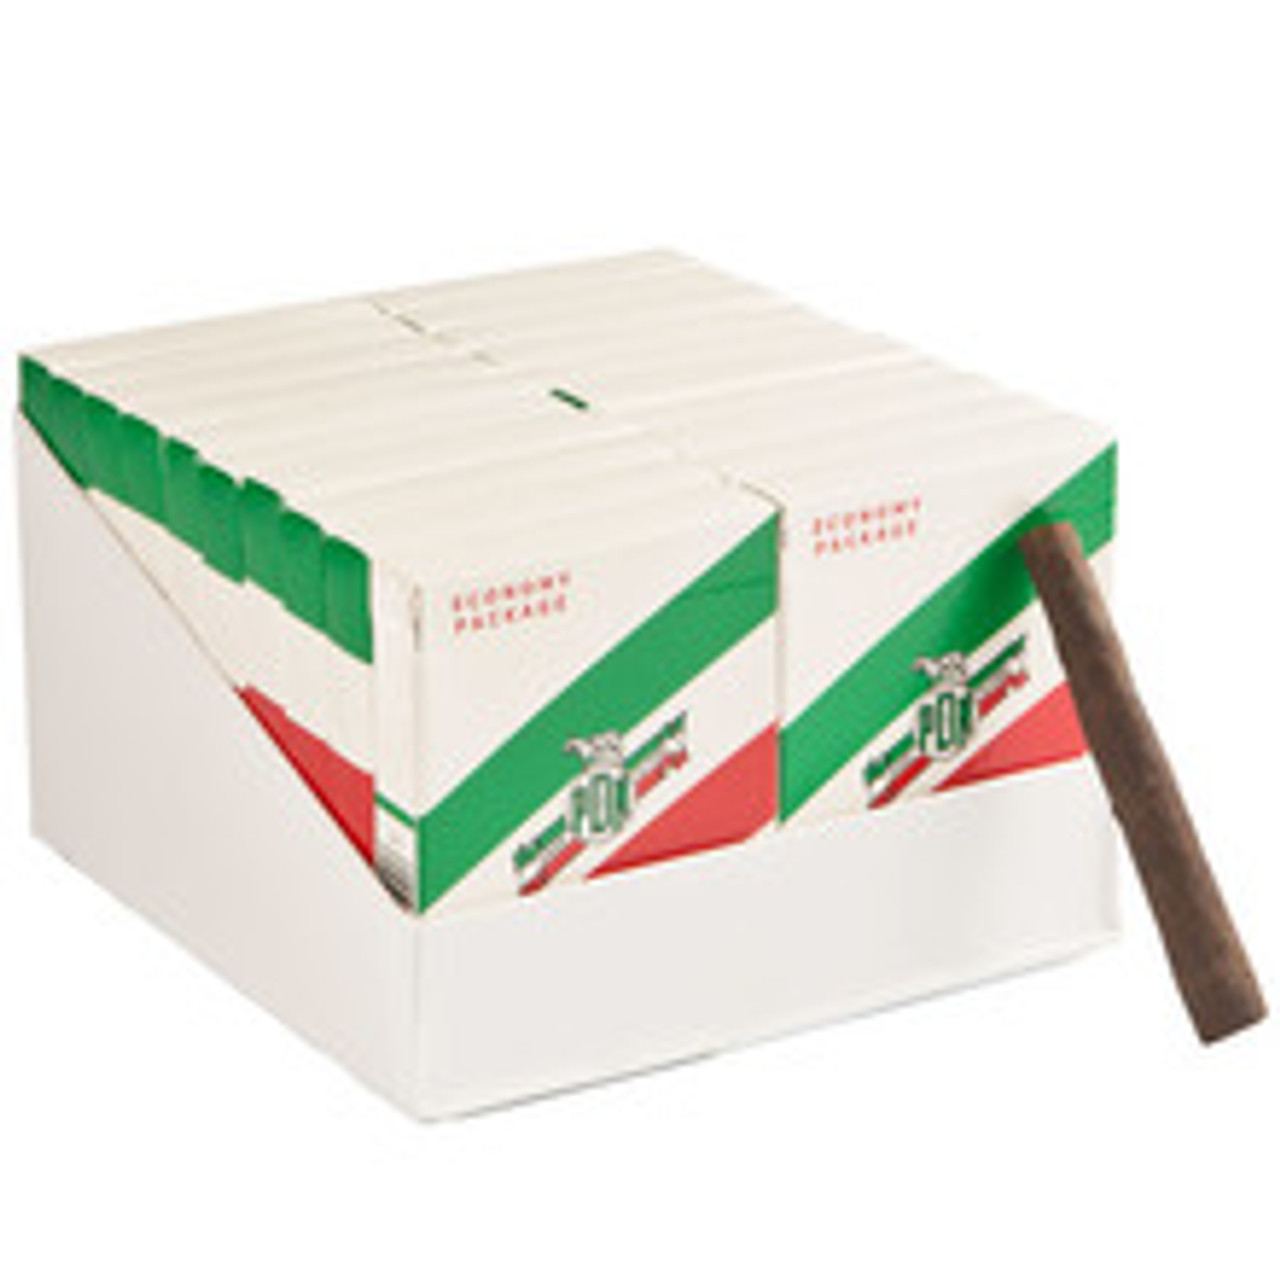 De Nobili Economy Cigars (20 Packs Of 5) - Natural *Box